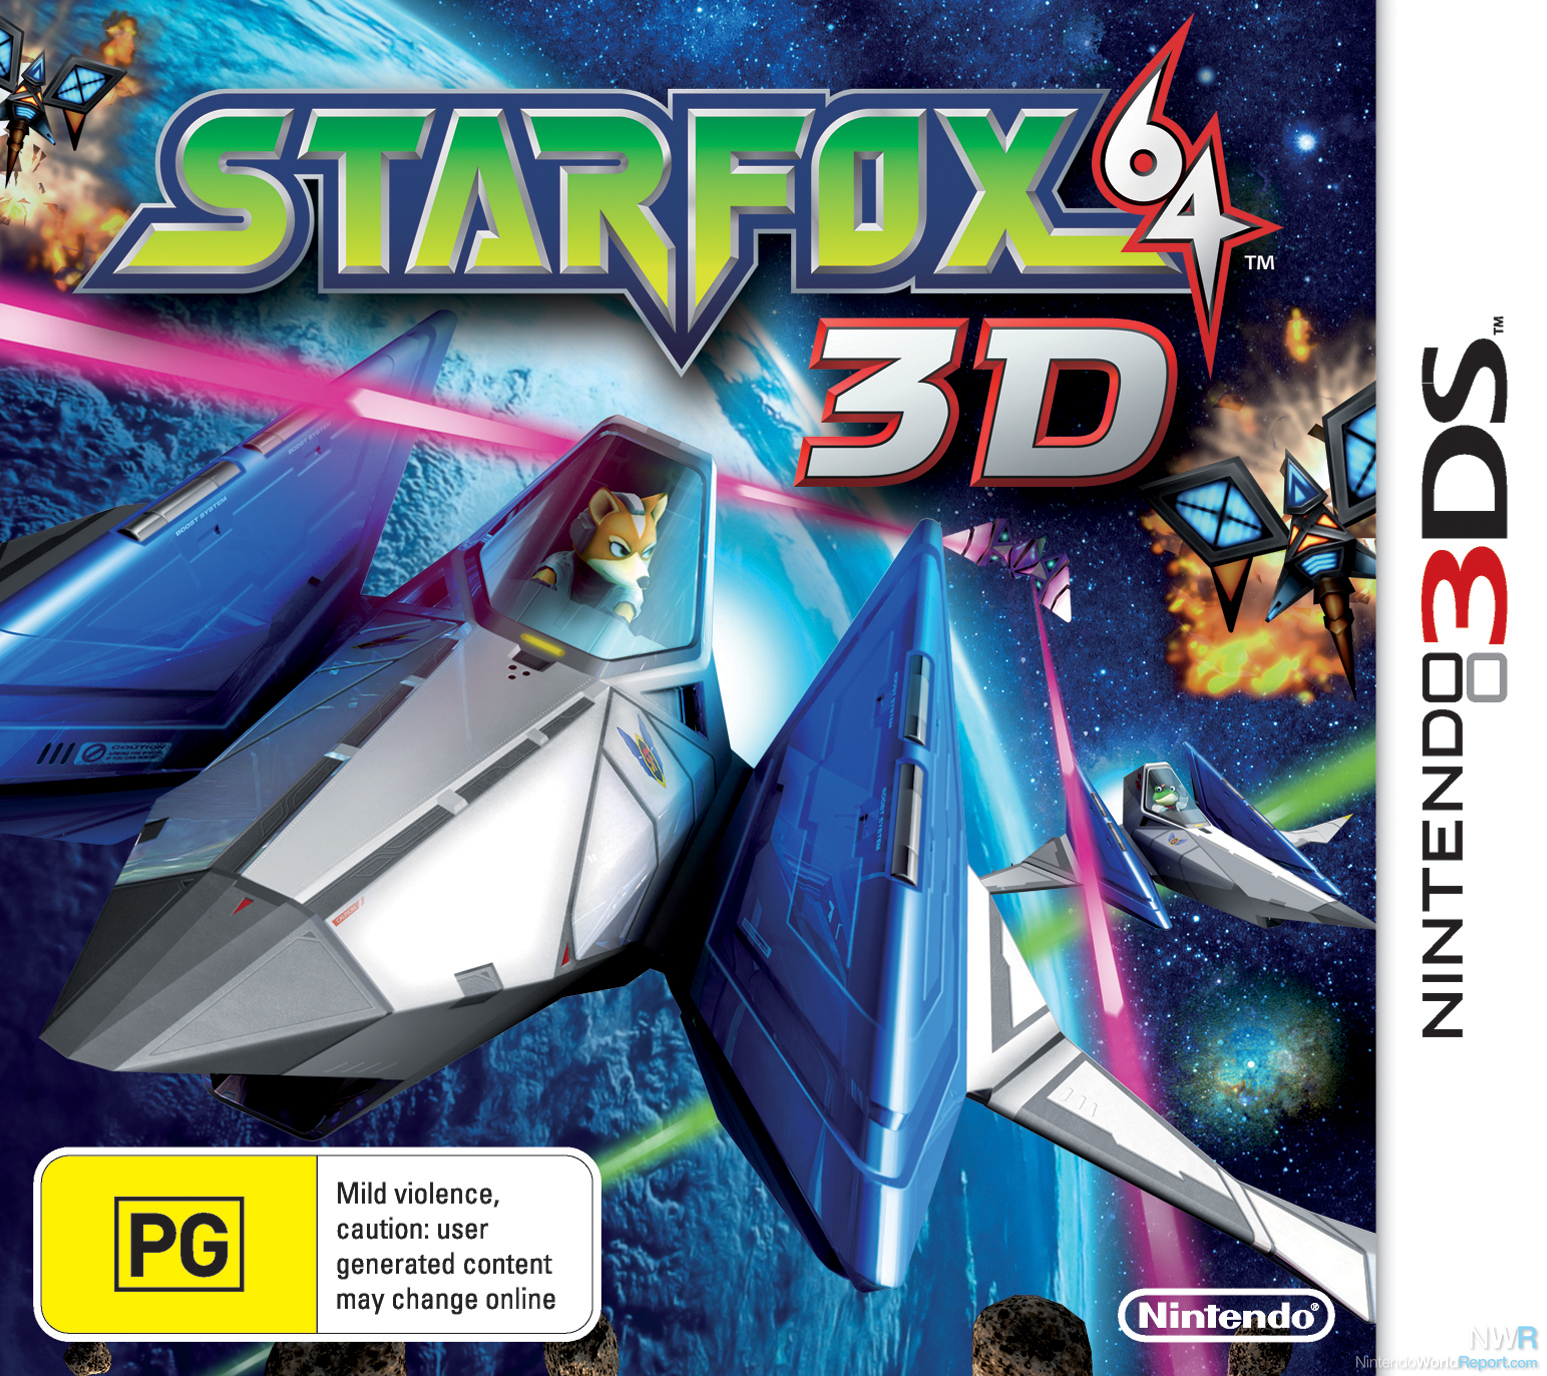 New Starfox 64 3D details revealed - Vooks